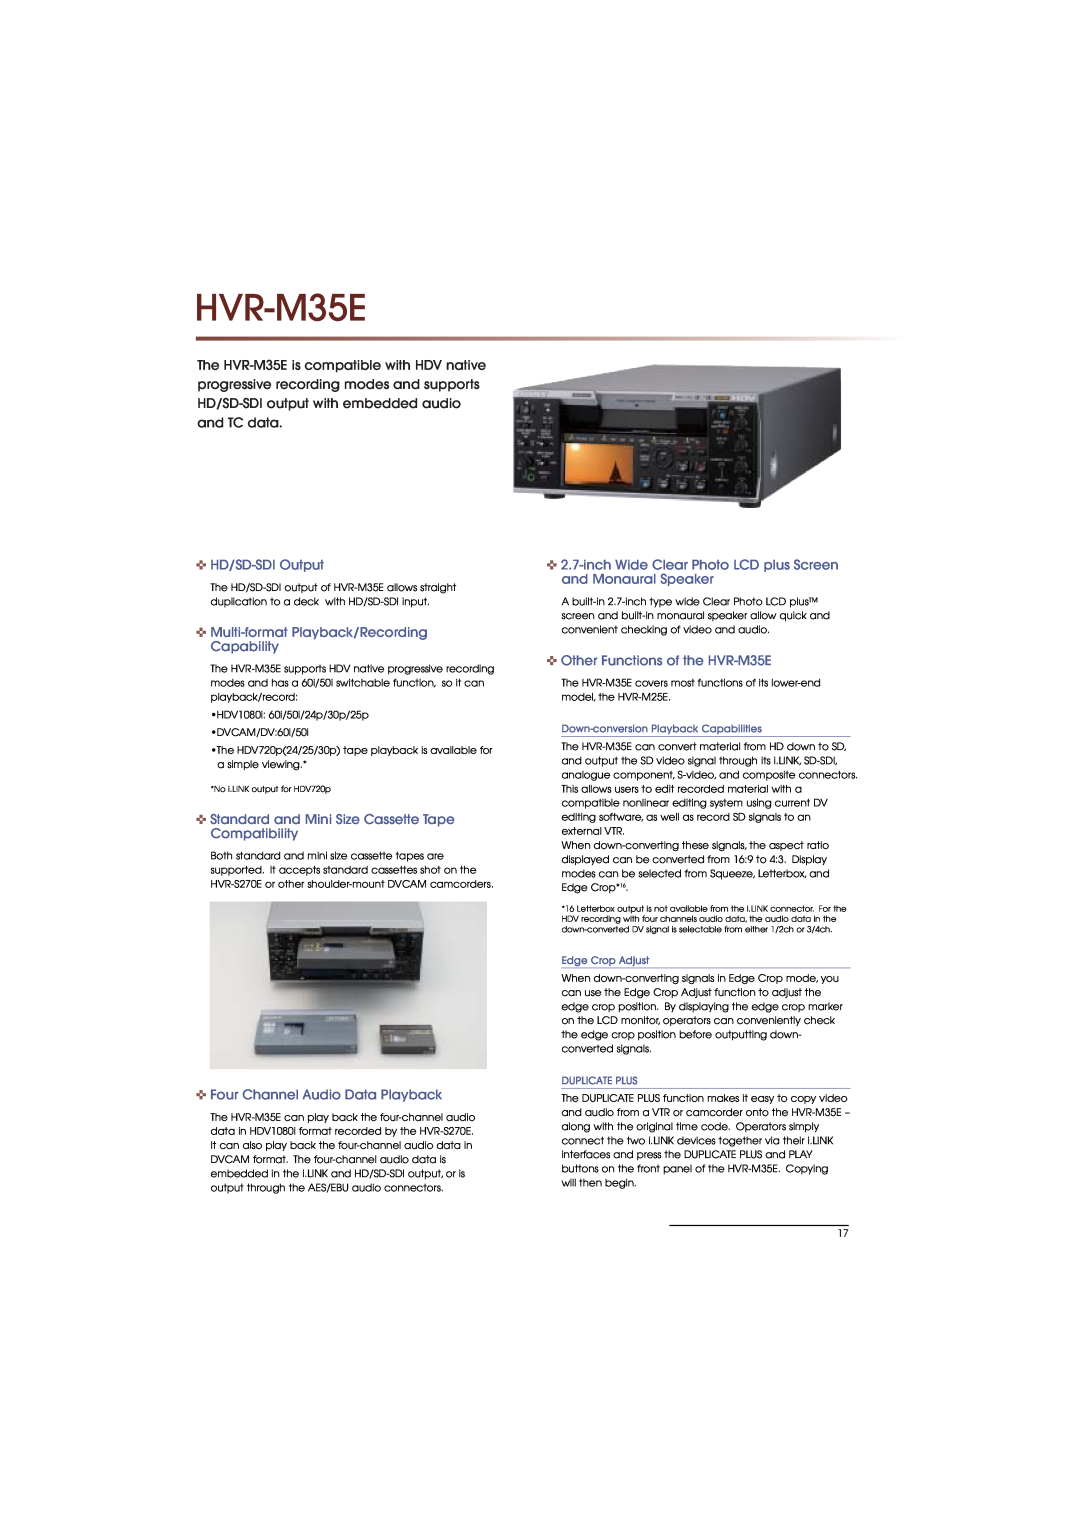 Sony HVR-M35E, HVR-Z7E manual HD/SD-SDI Output, Multi-format Playback/Recording Capability, Four Channel Audio Data Playback 